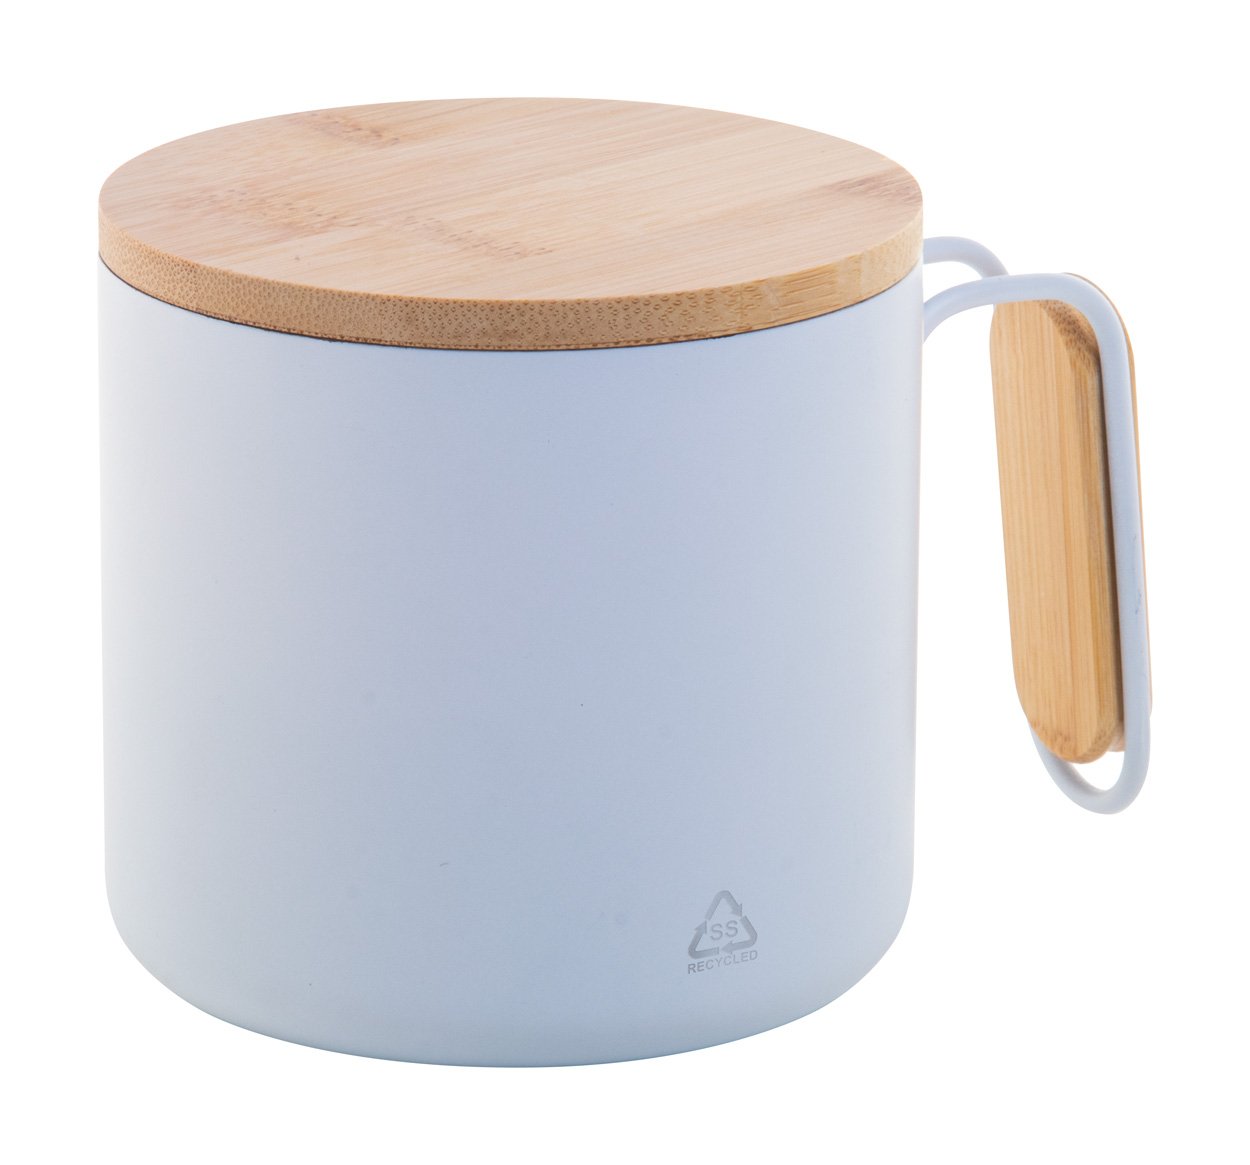 Graboo thermo mug - white